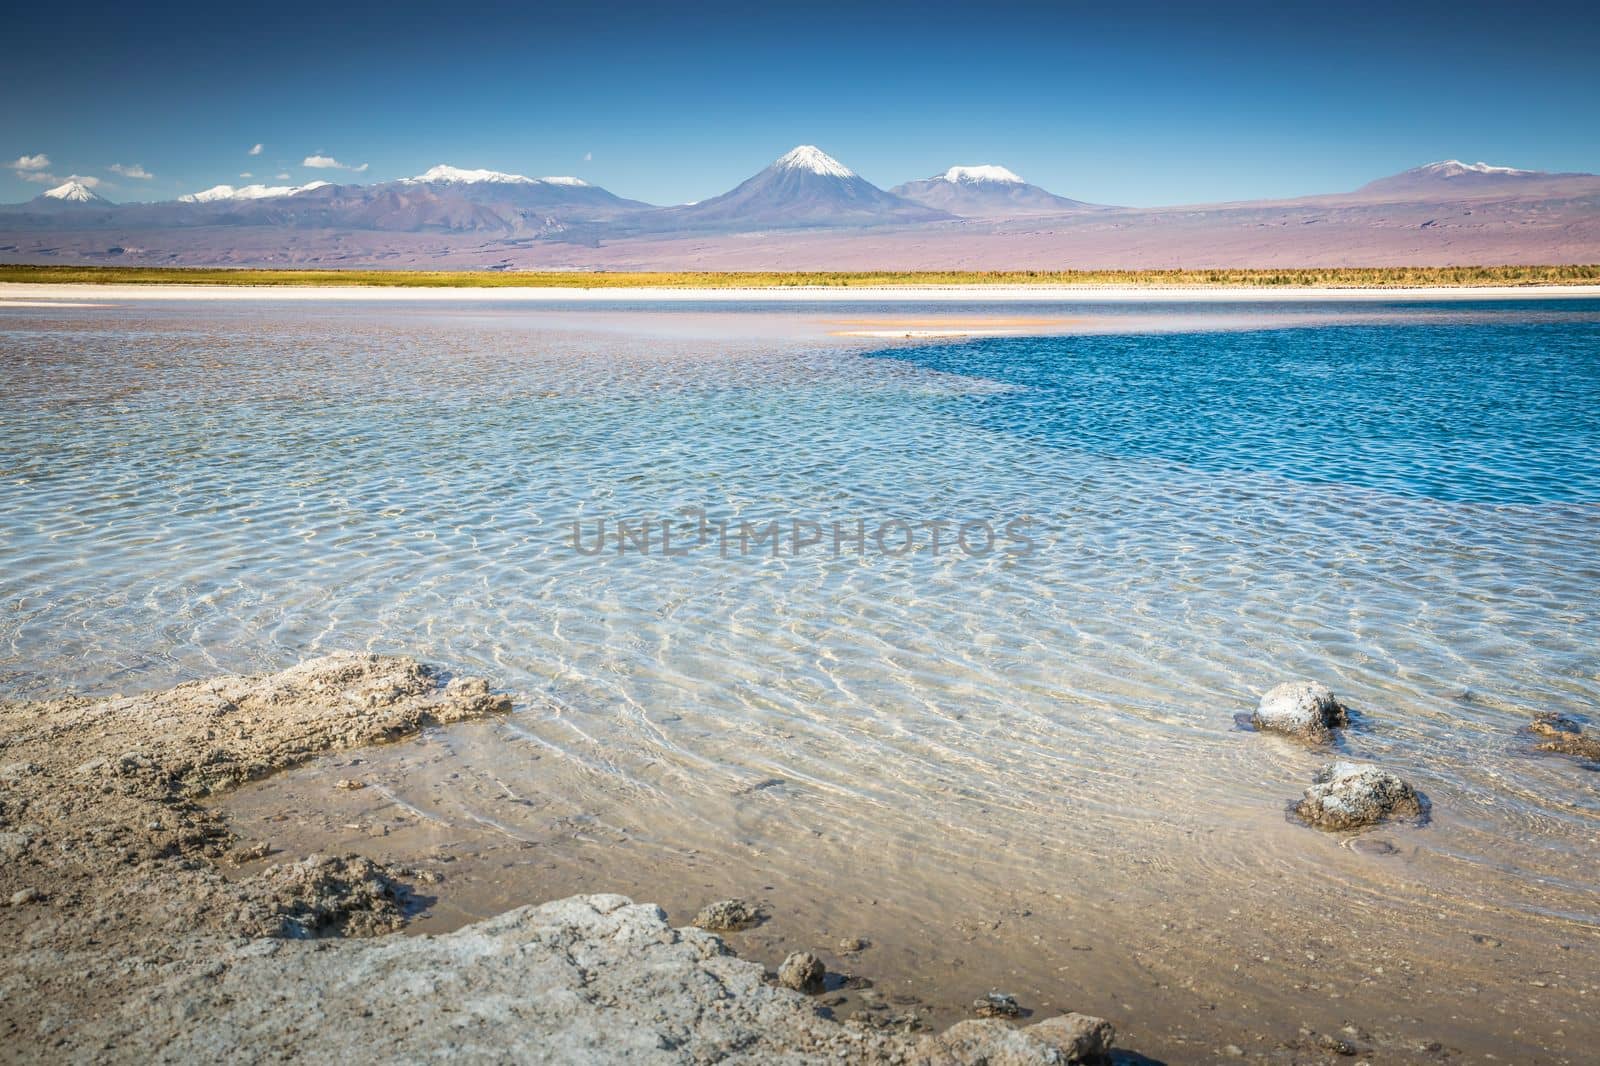 Licancabur and Peaceful reflection lake with dramatic volcanic landscape at Sunset, Atacama Desert, Chile